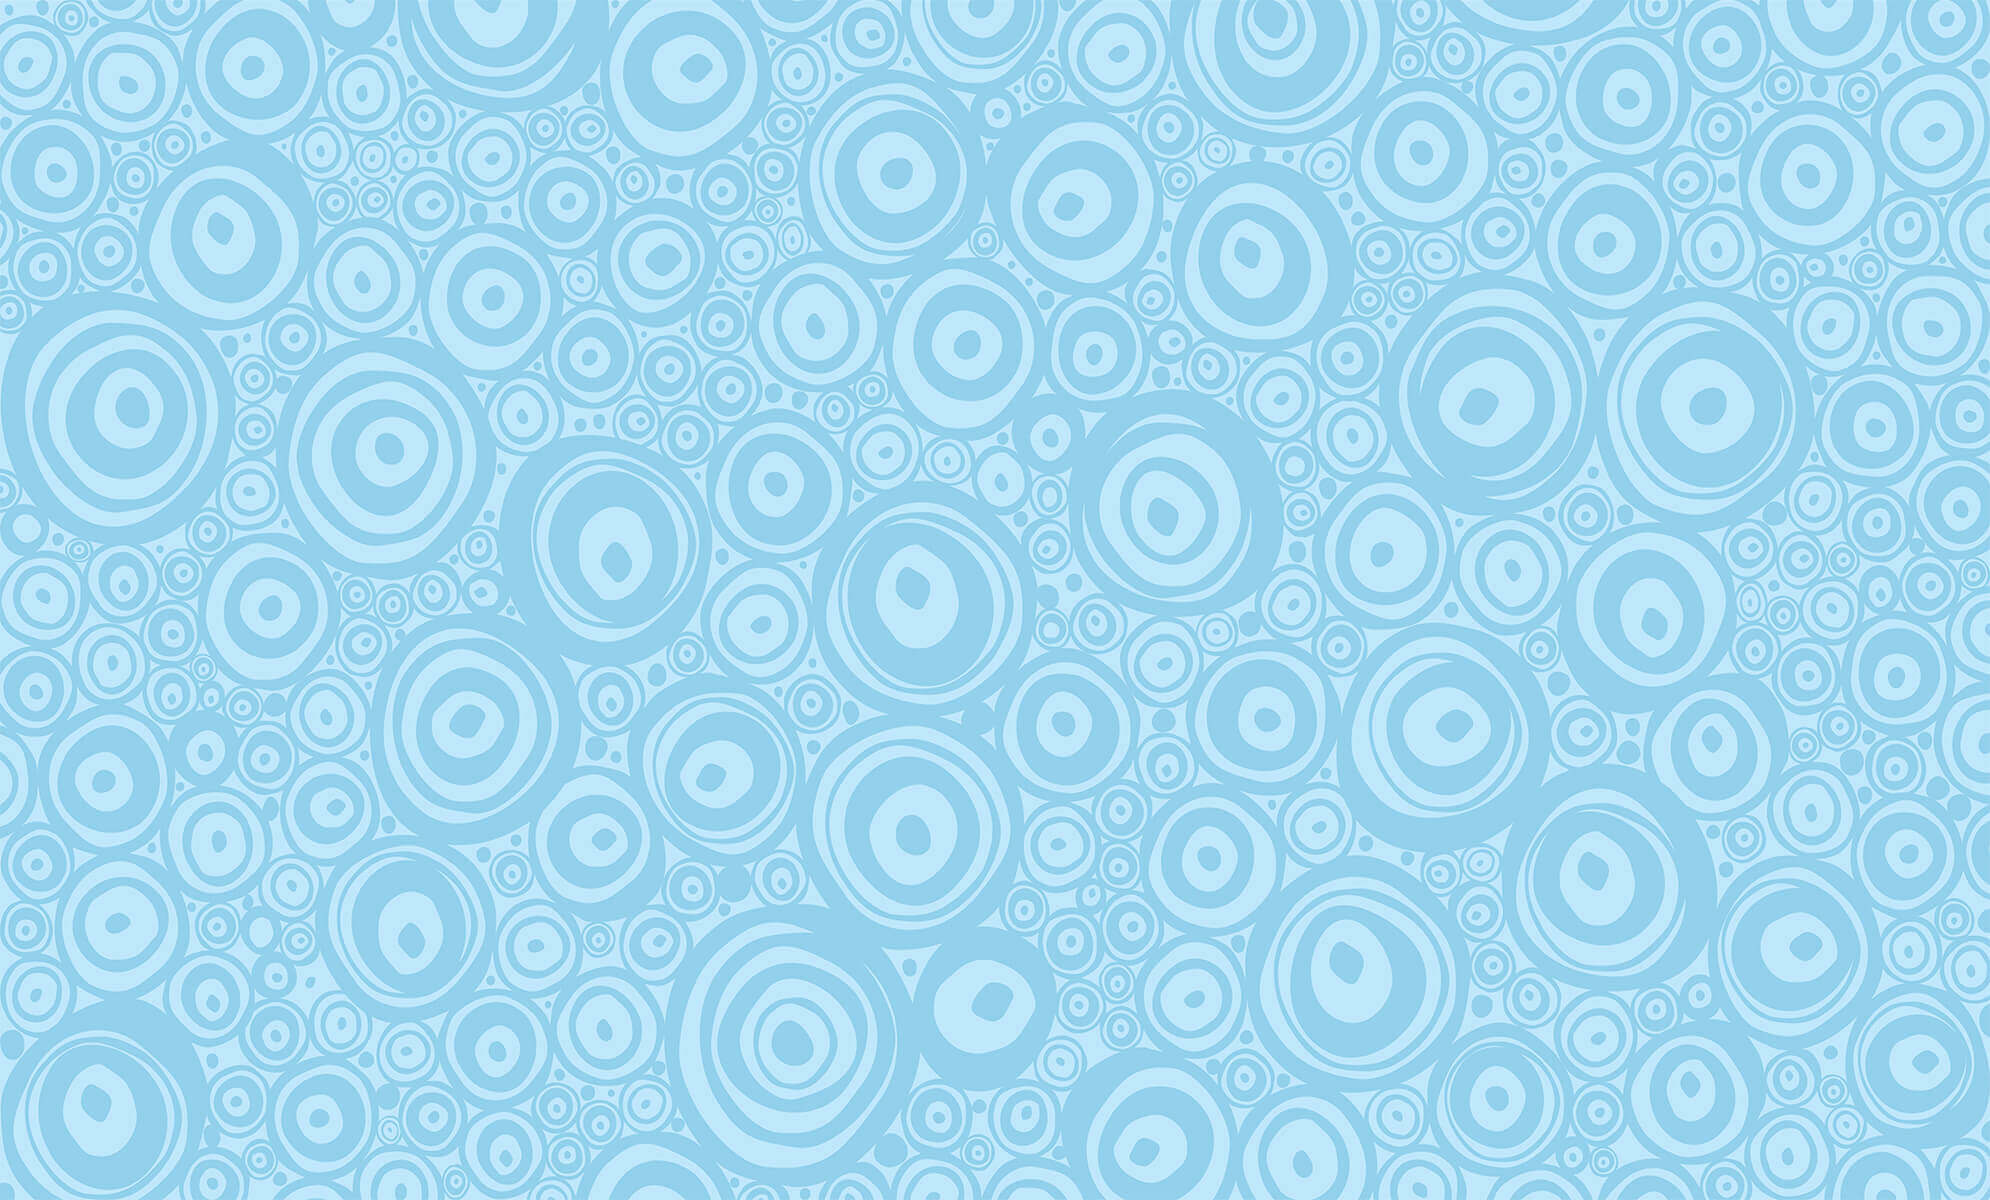 Background circles - light blue